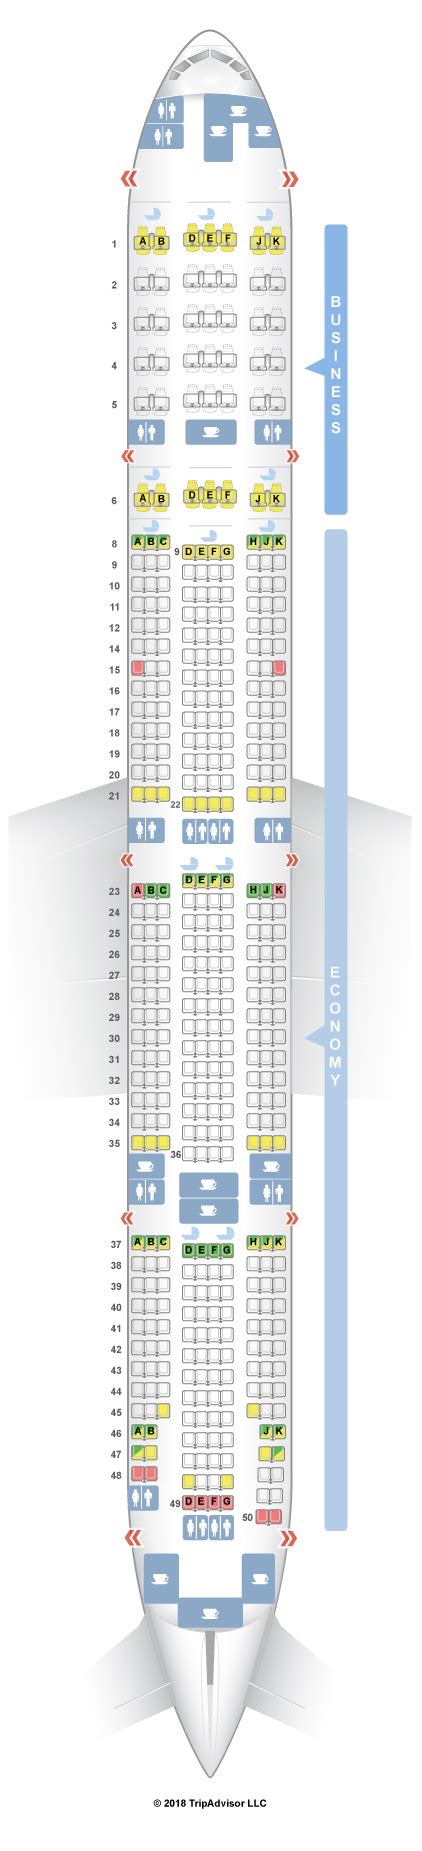 Seatguru Seat Map Emirates Boeing 777 300er 77w Two Class